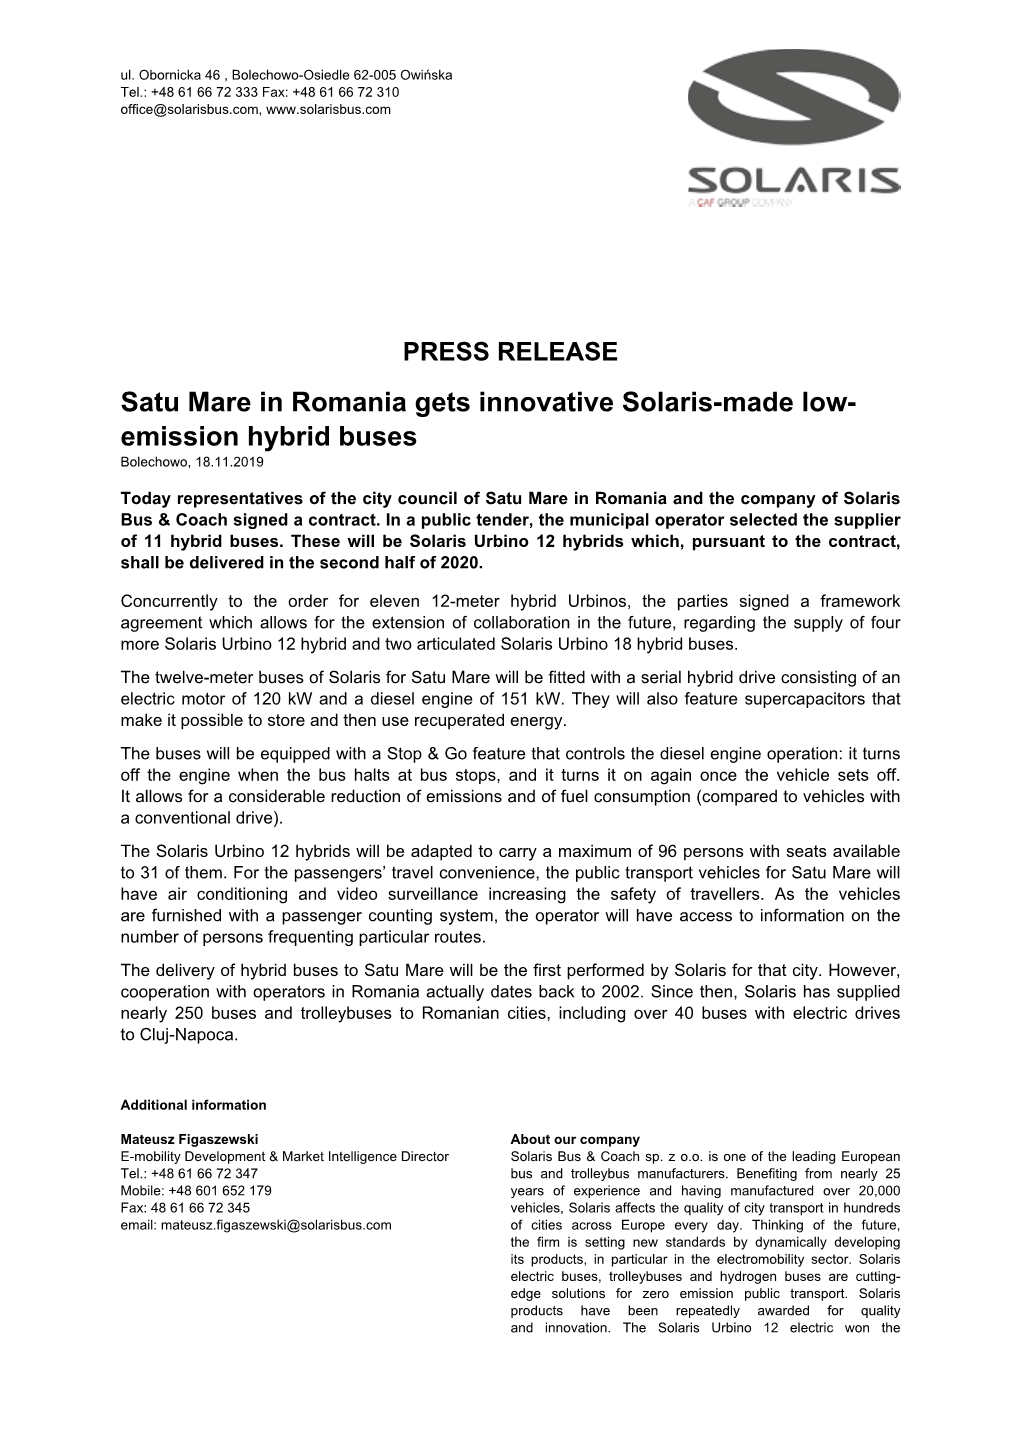 Satu Mare in Romania Gets Innovative Solaris-Made Low-Emission Hybrid